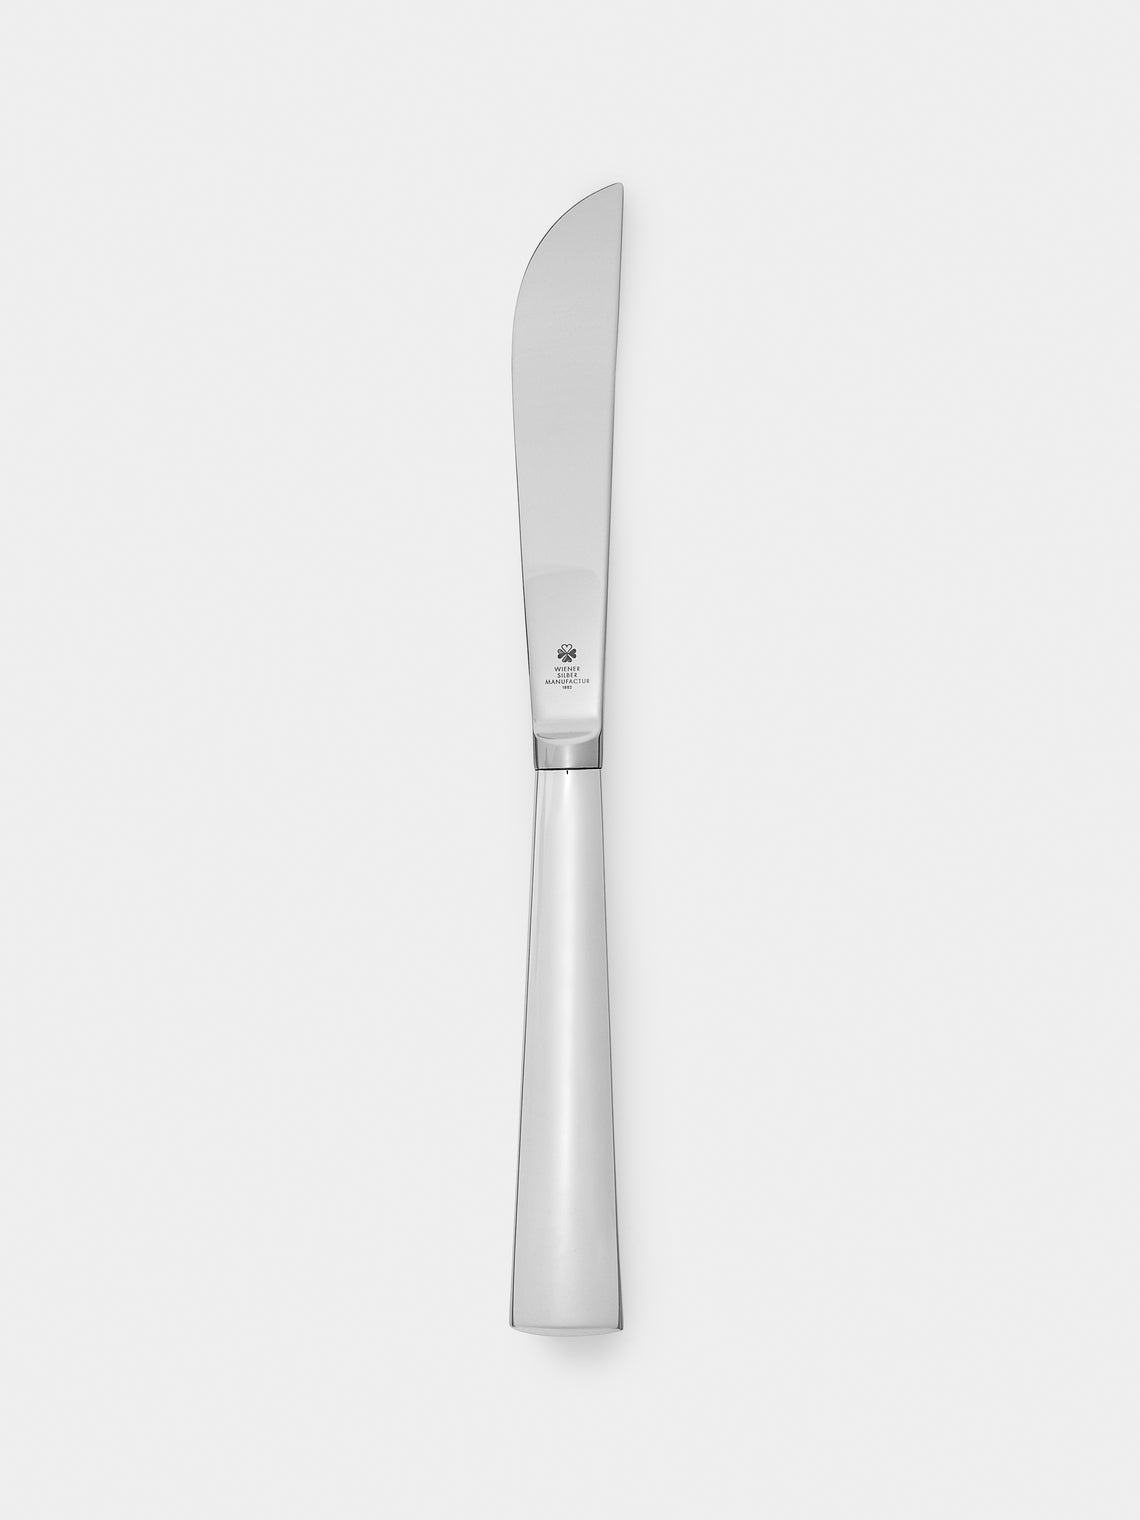 Wiener Silber Manufactur - Josef Hoffmann 135 Silver-Plated Dinner Knife - Silver - ABASK - 